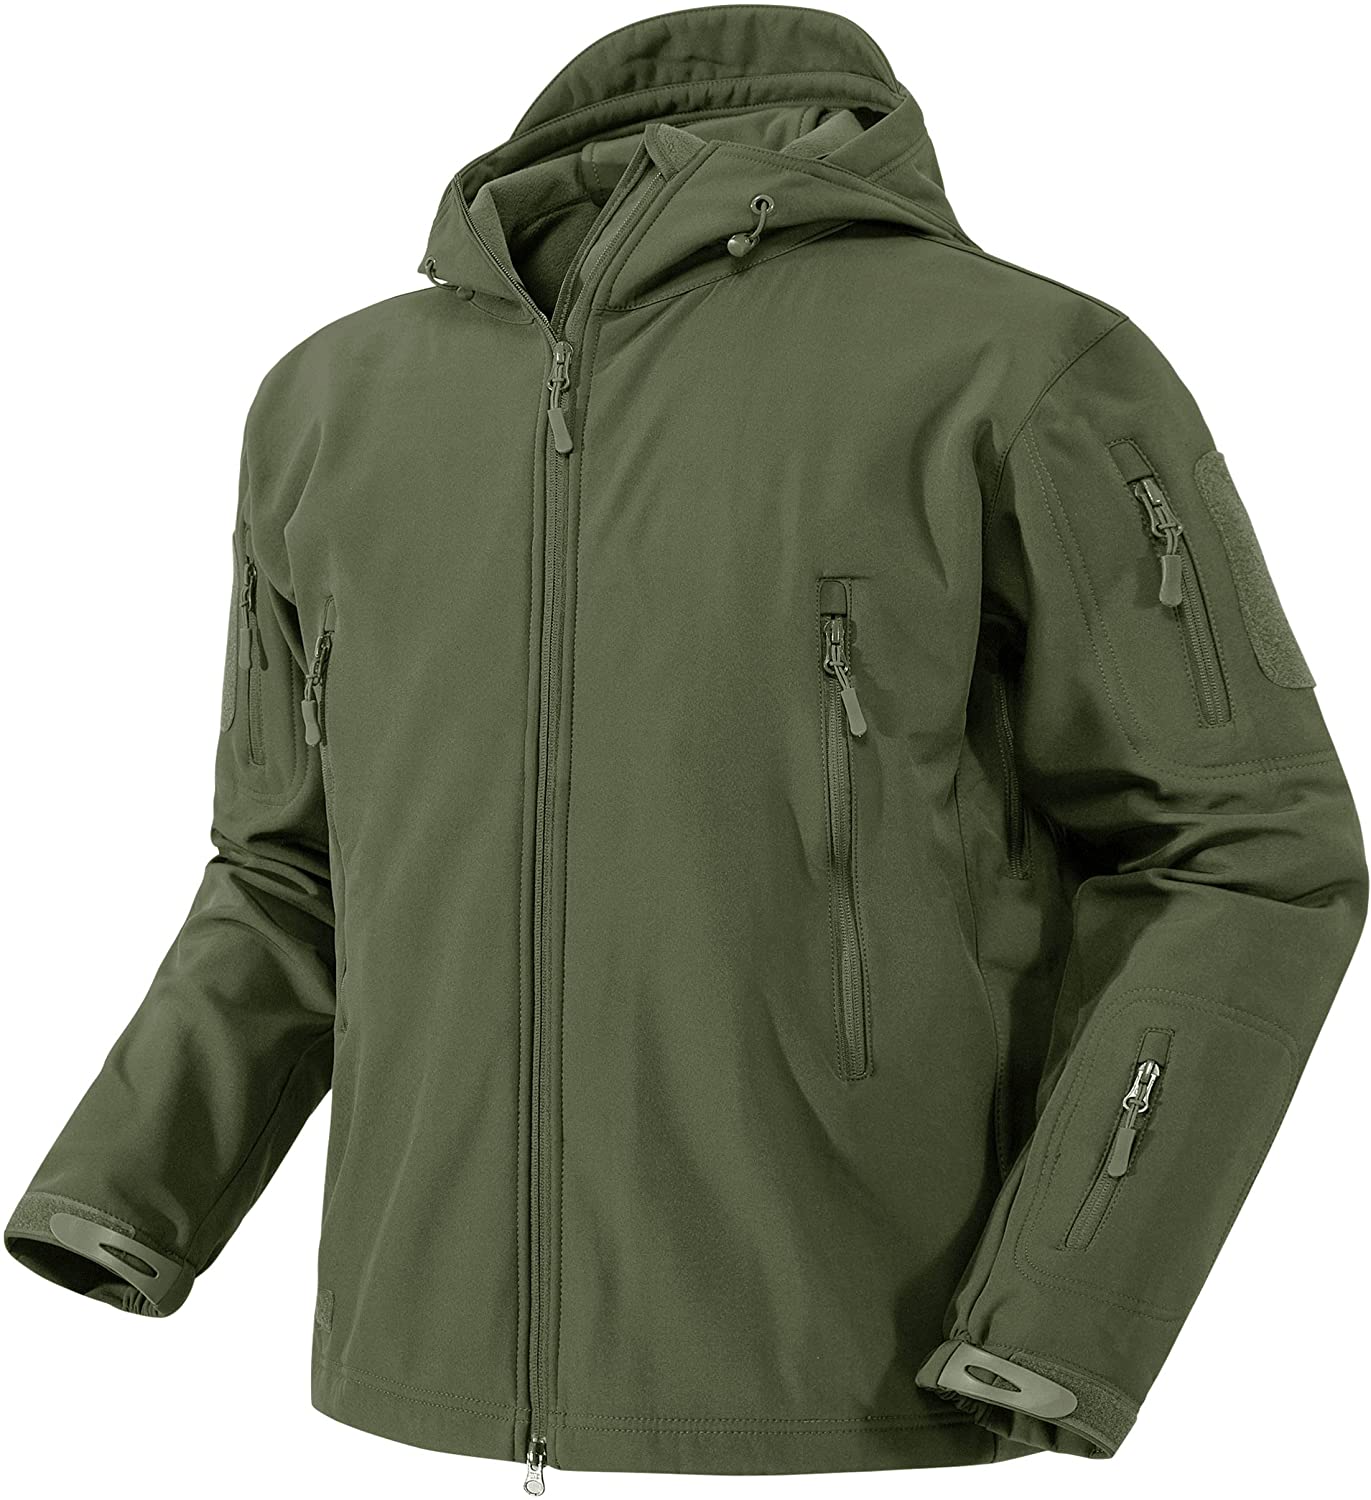 CHEXPEL mens tactical military Combat Jacket Winter Hooded Waterproof Snow Ski Softshell coat